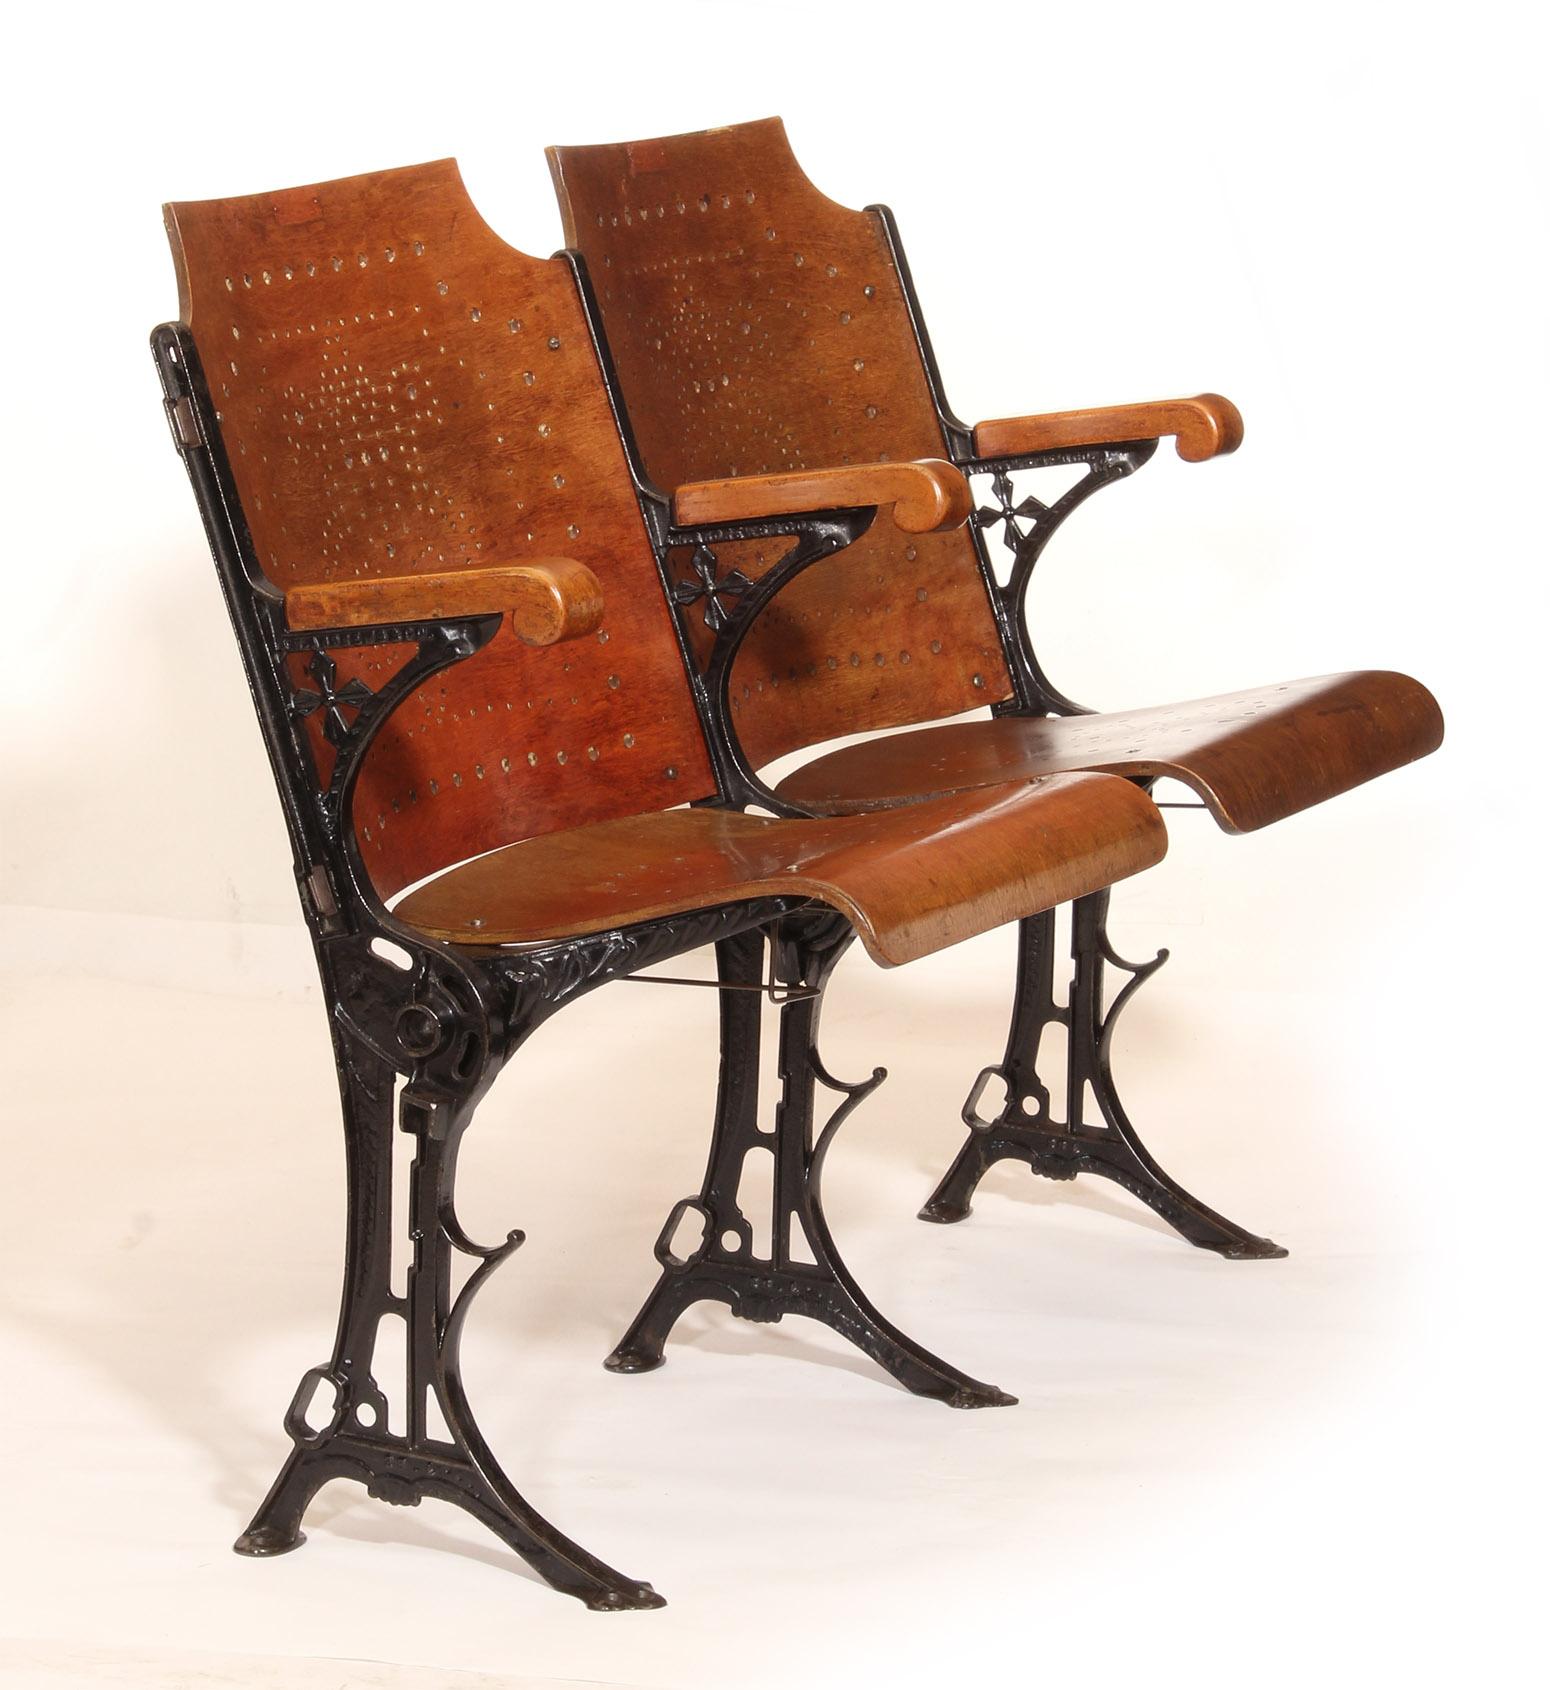 American Vintage Original Wood and Steel Folding Theater Seats, Set of 2